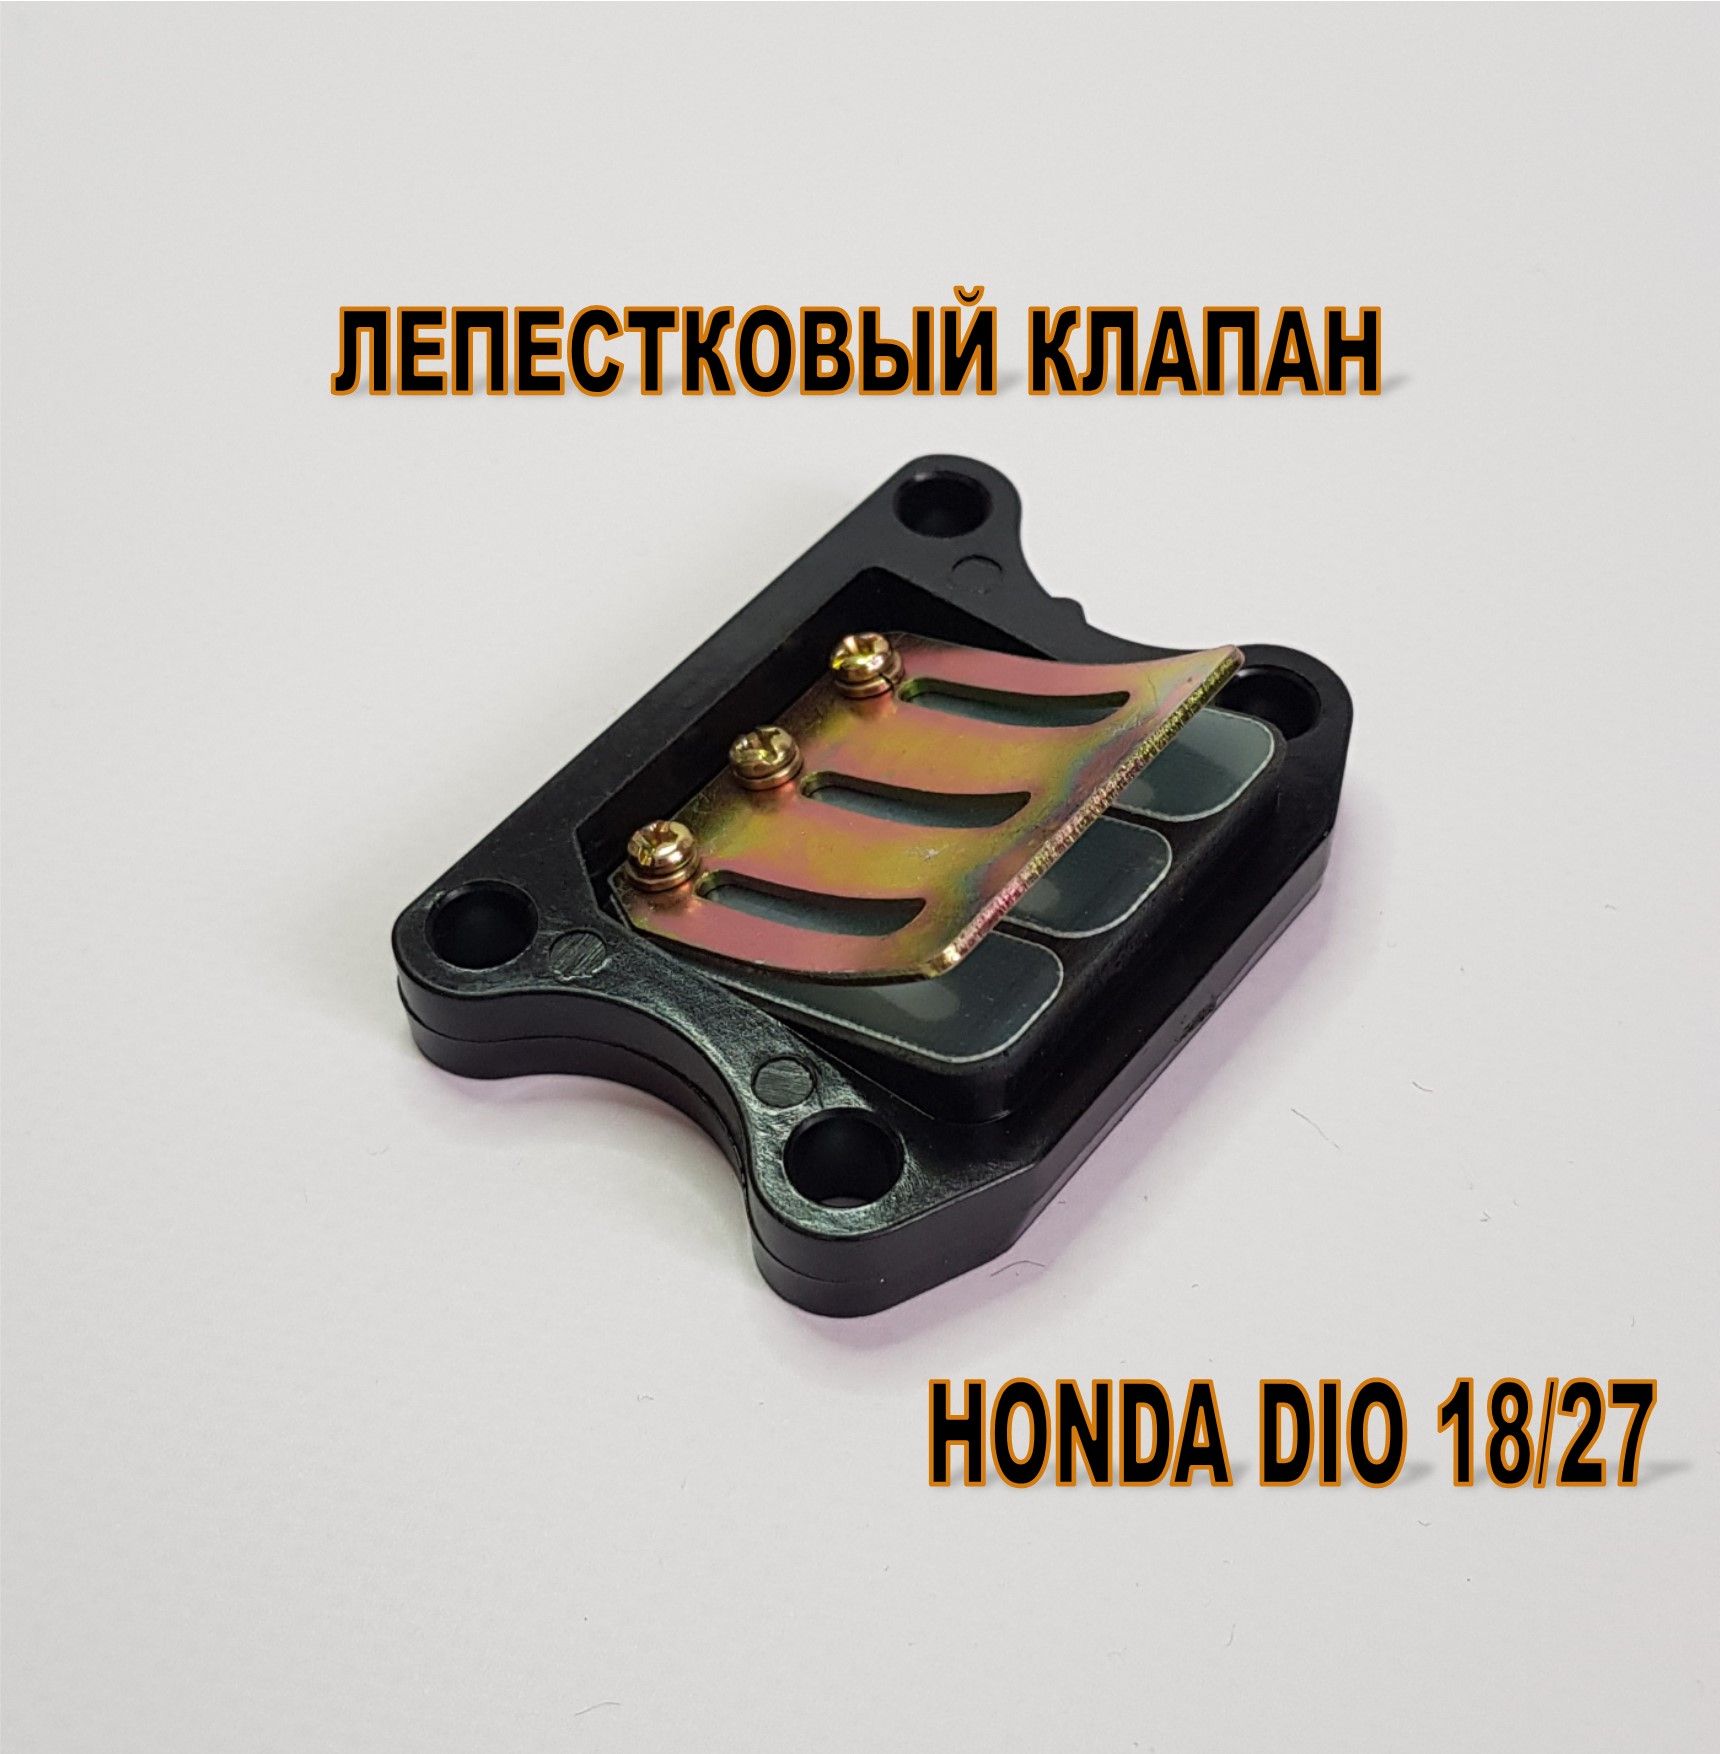 Dio клапаны. Лепестковый клапан дио 18. Лепестковый клапан Honda Dio. Лепестковый клапан дио 27. Лепестковый клапан Хонда CR 250 1996.